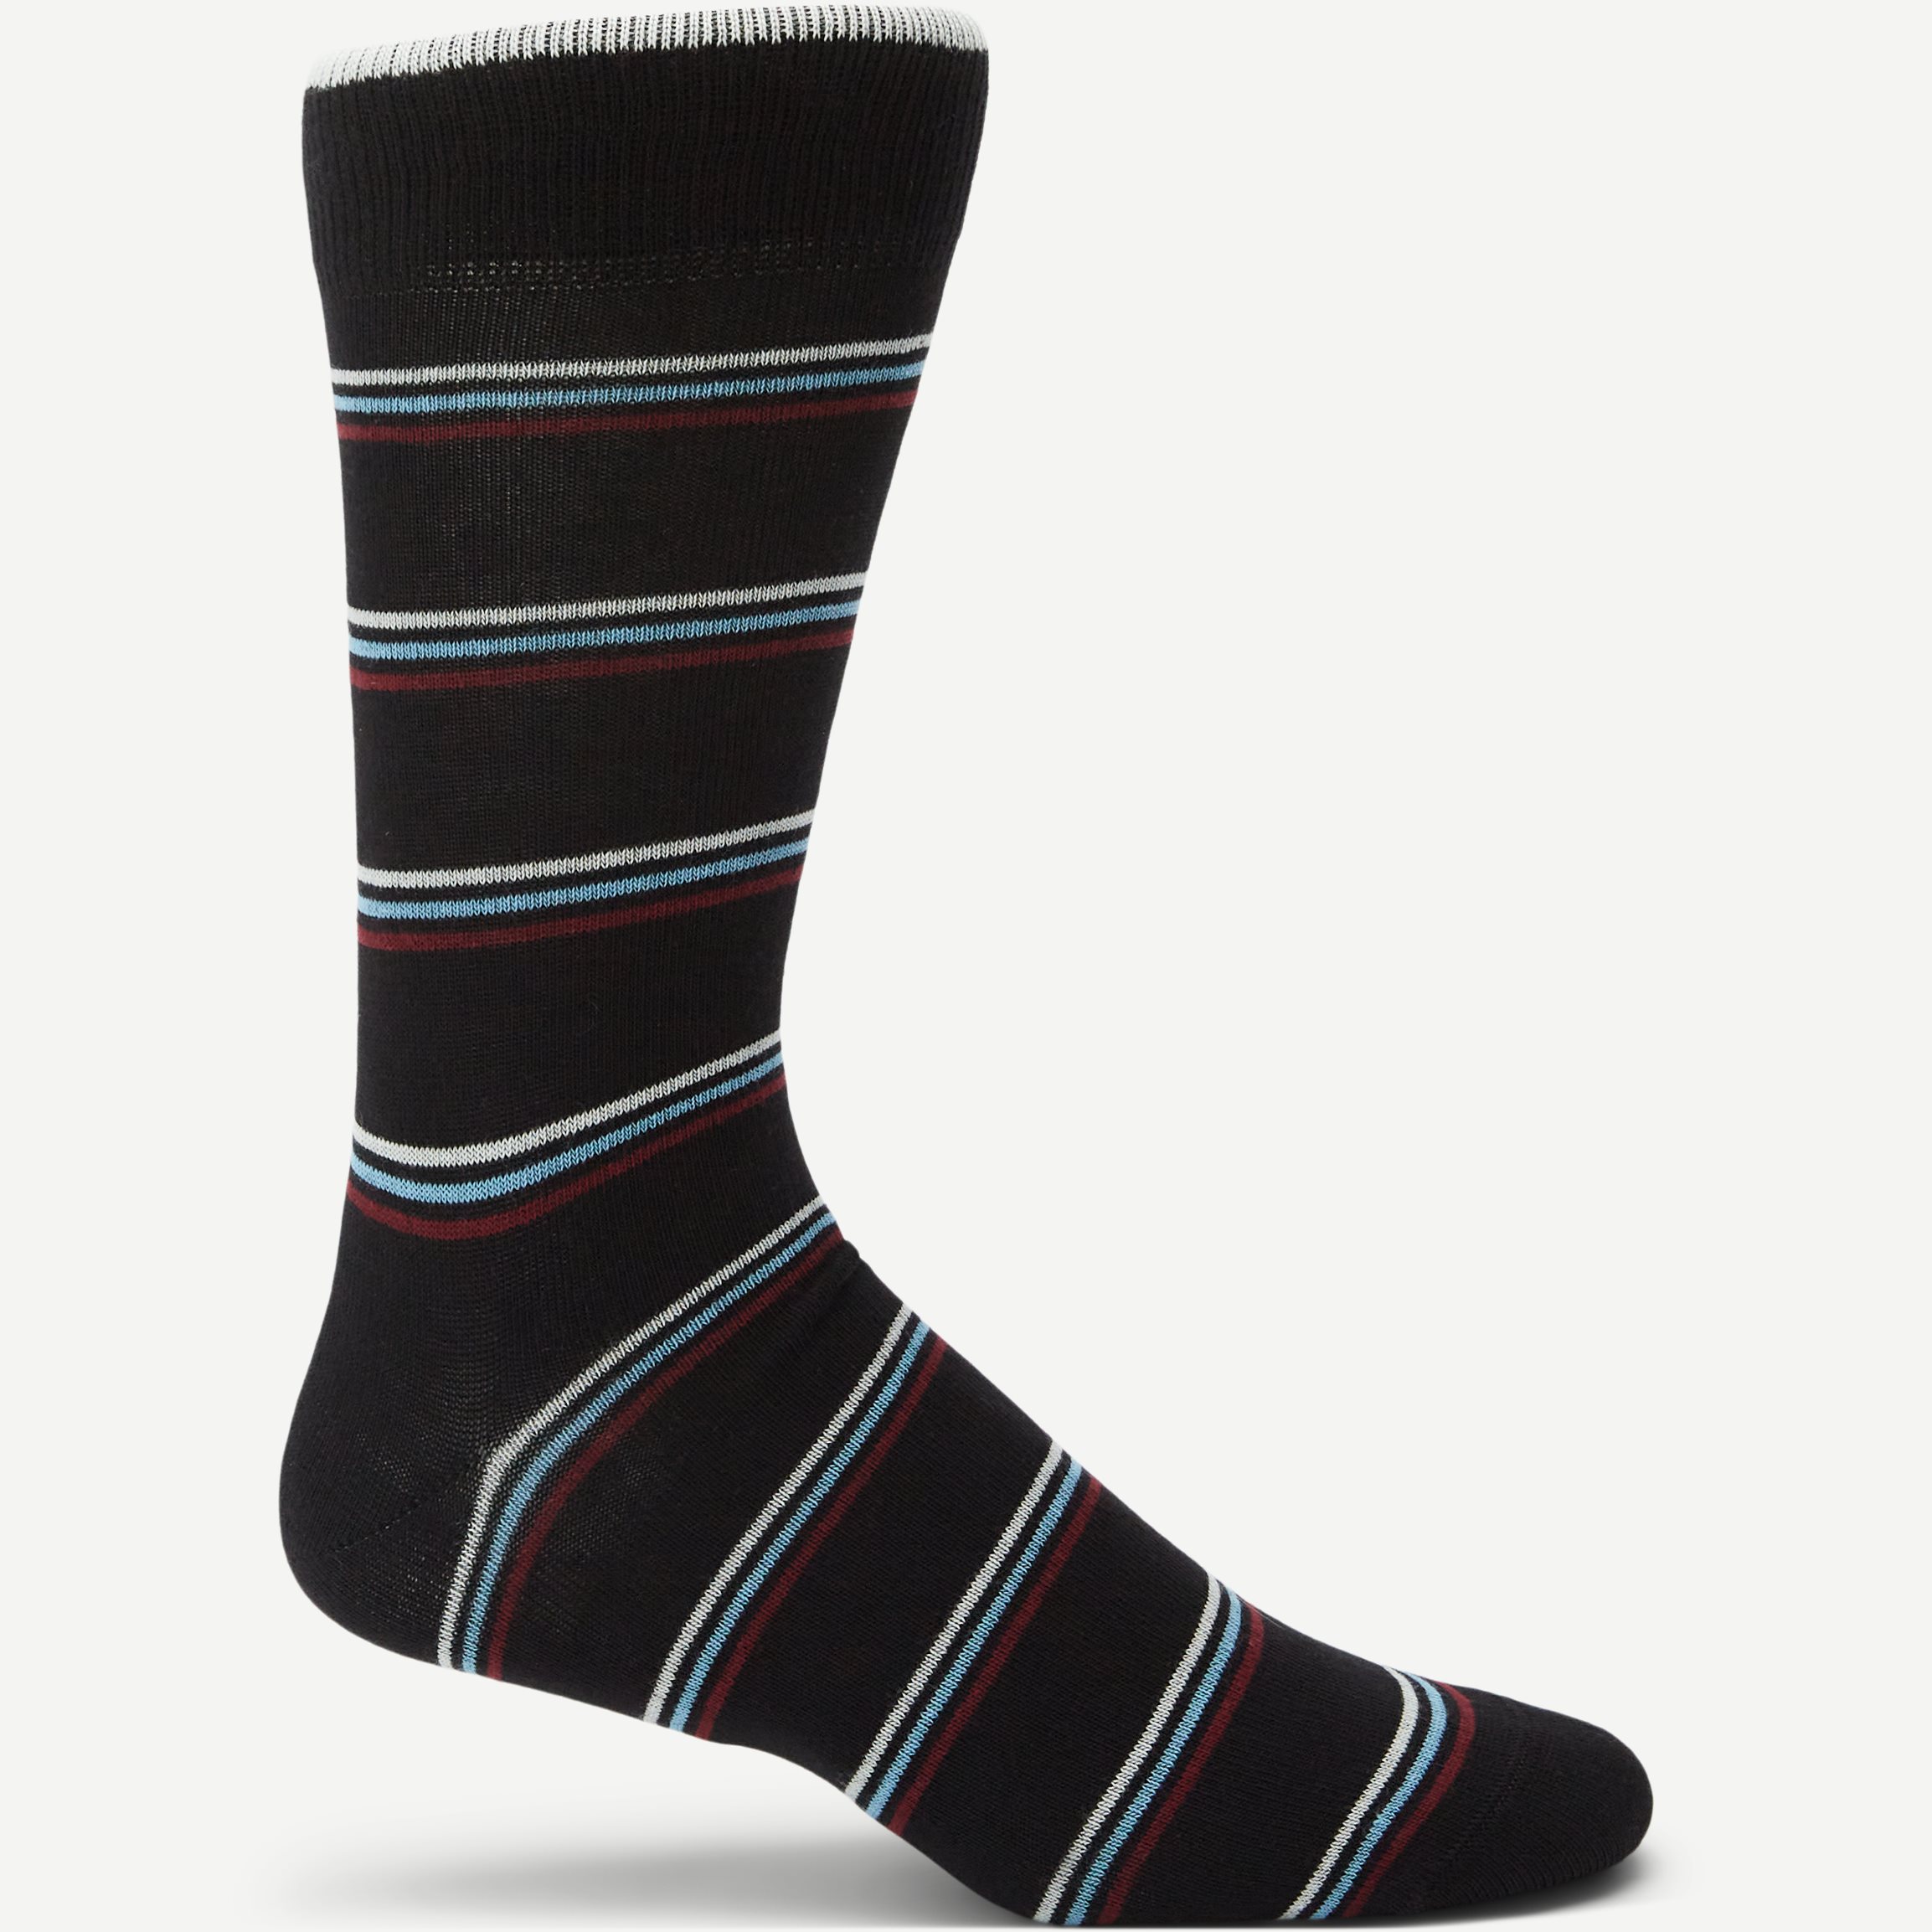 Simple Socks Socks MARLEY Black